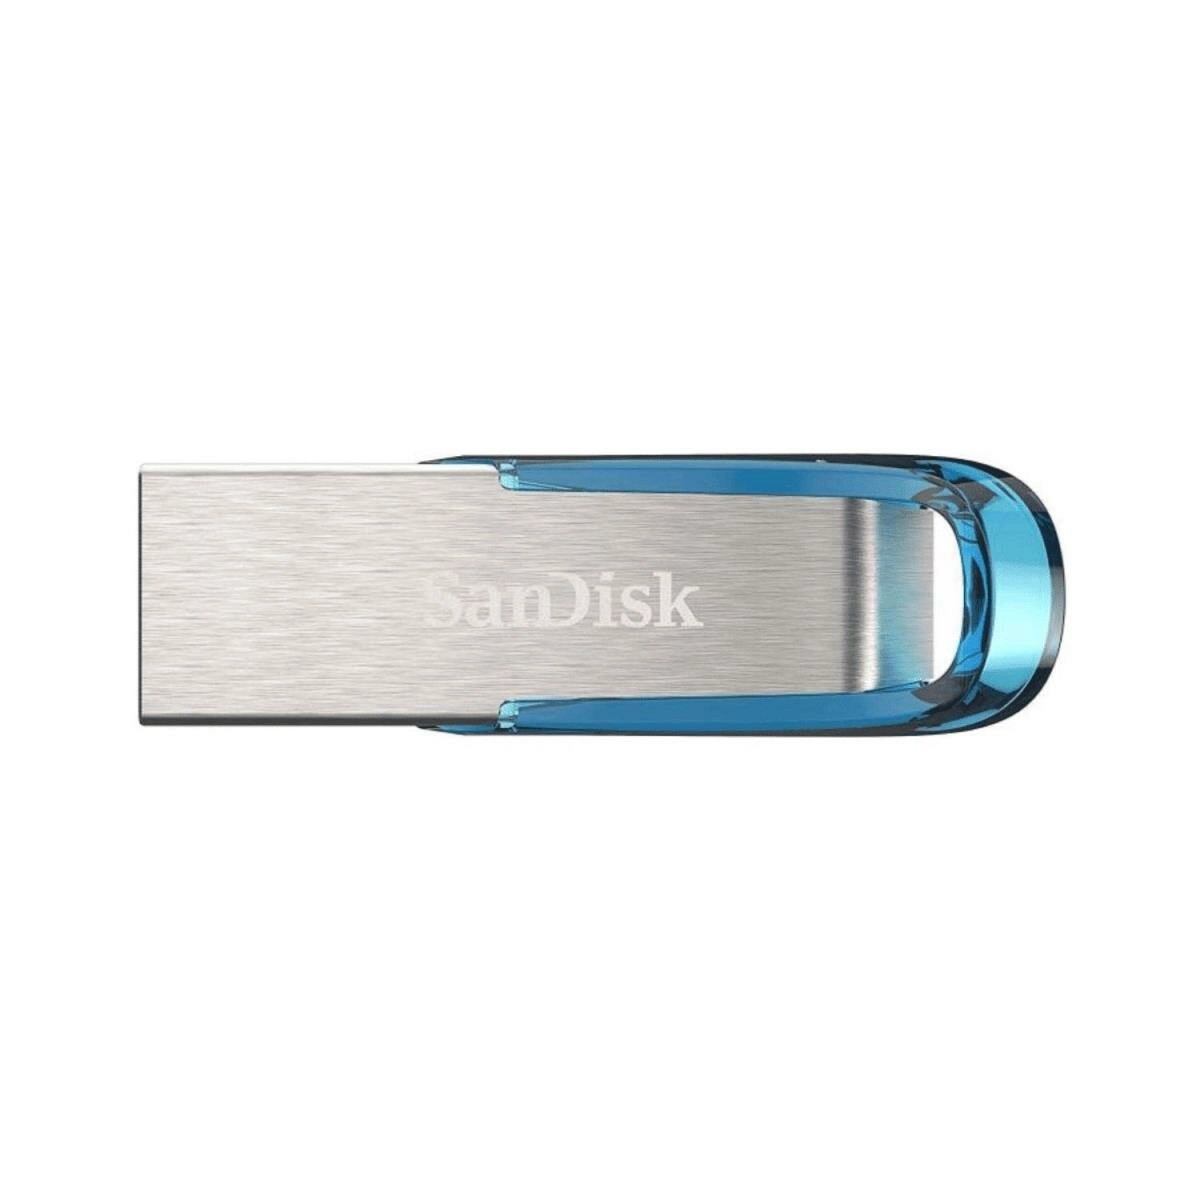 SanDisk Ultra Flair USB 3.0 Flash Drive Blue